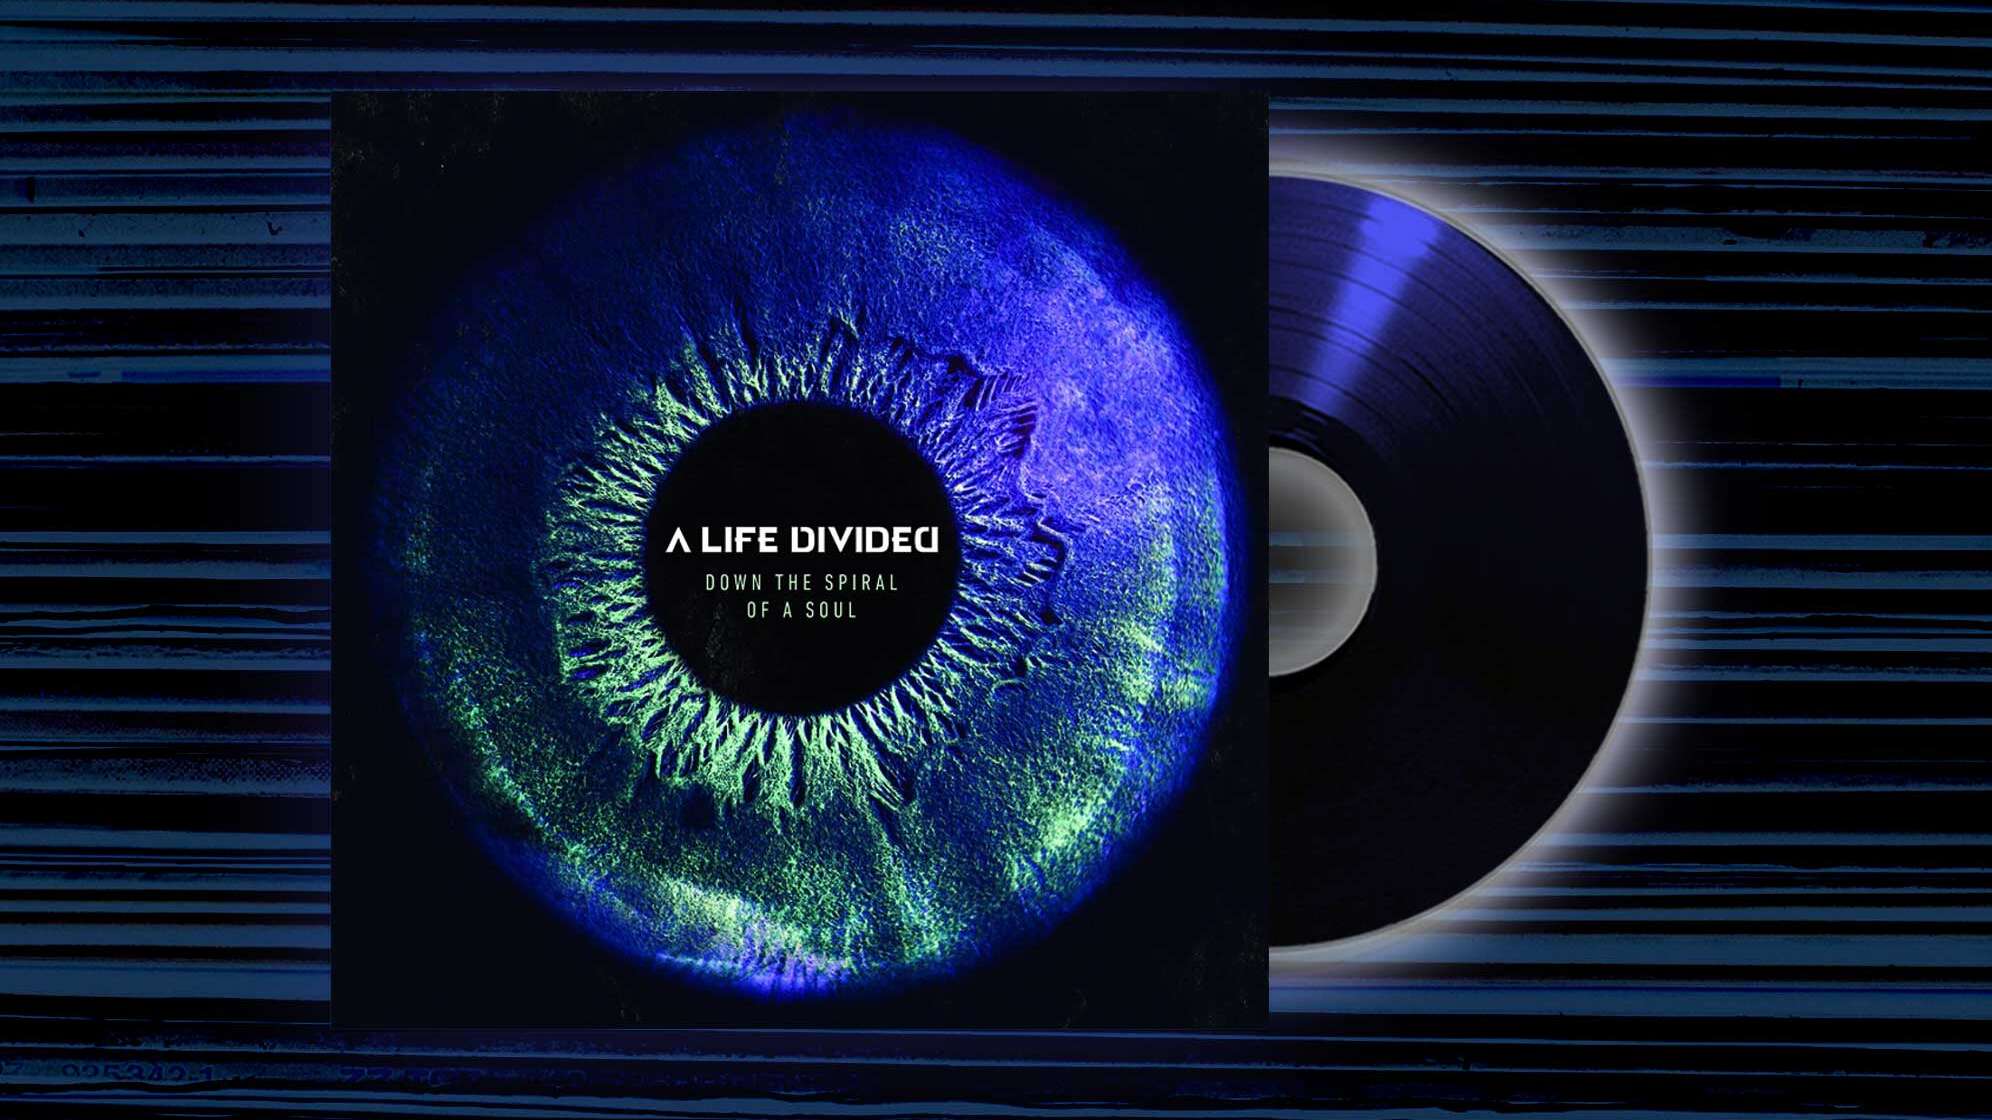 Das Album der Woche "Down The Spiral Of A Soul" von A Life Divided.